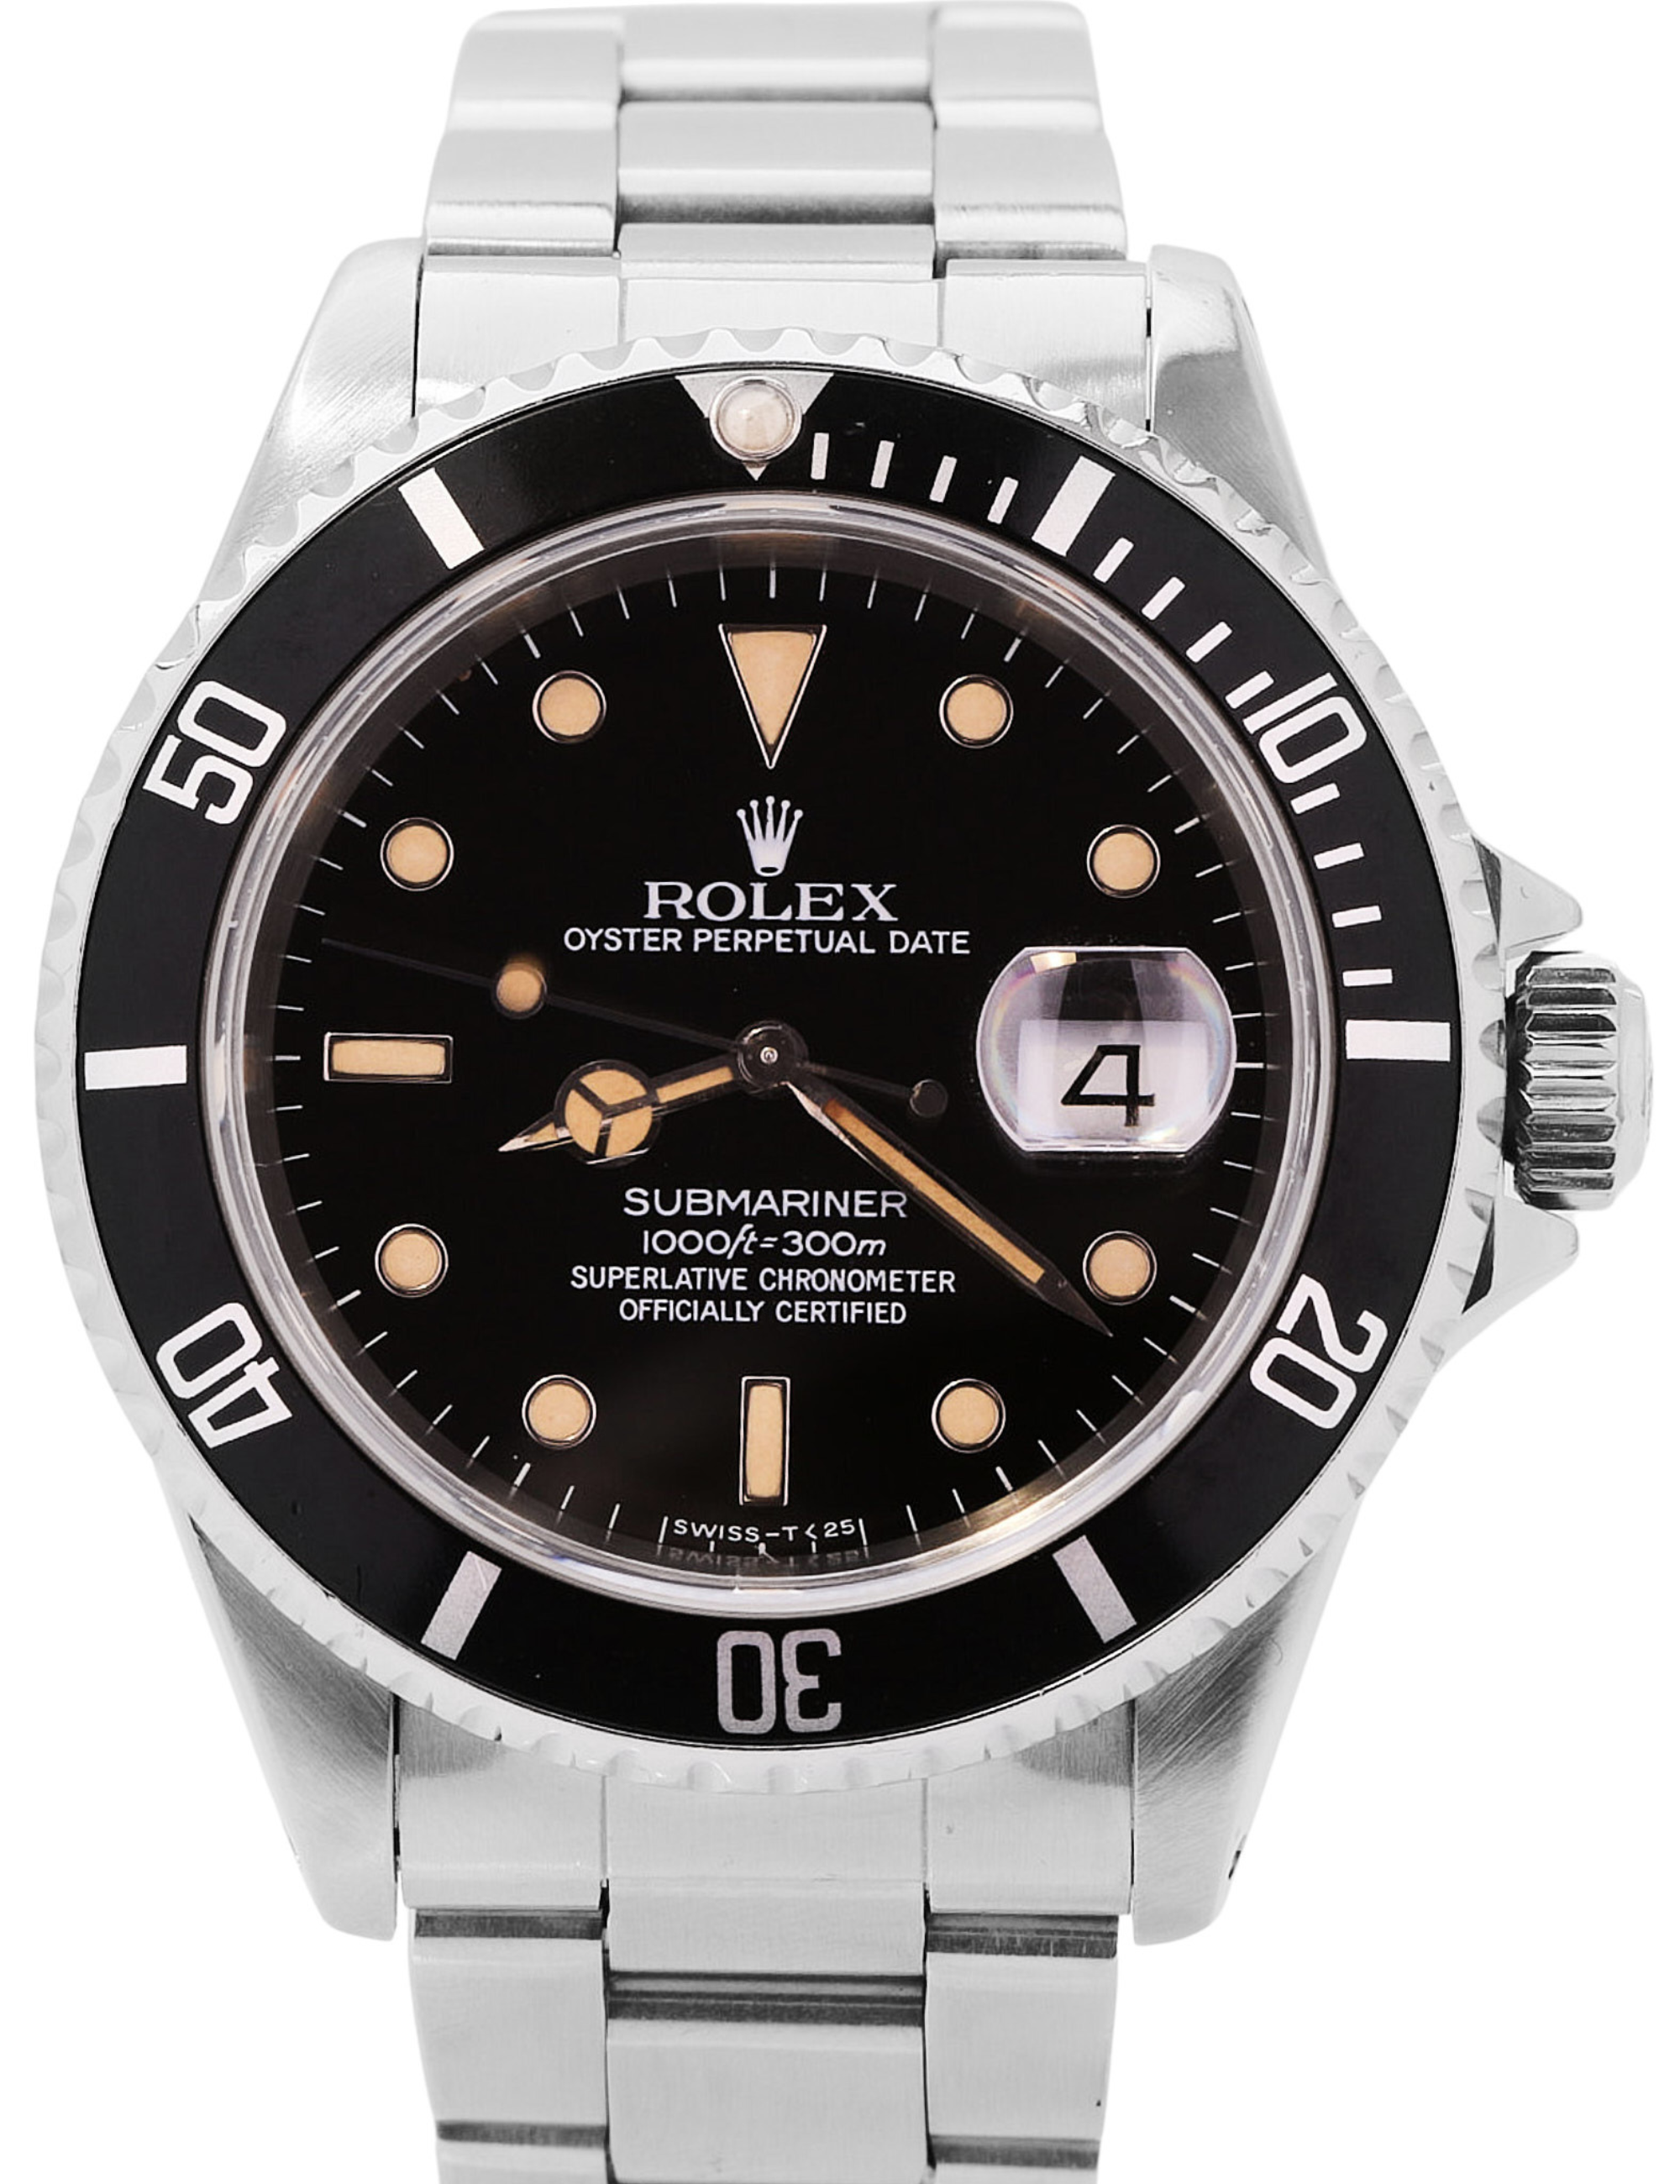 Rolex Oyster Perpetual Submariner Date, Submariner, Rolex